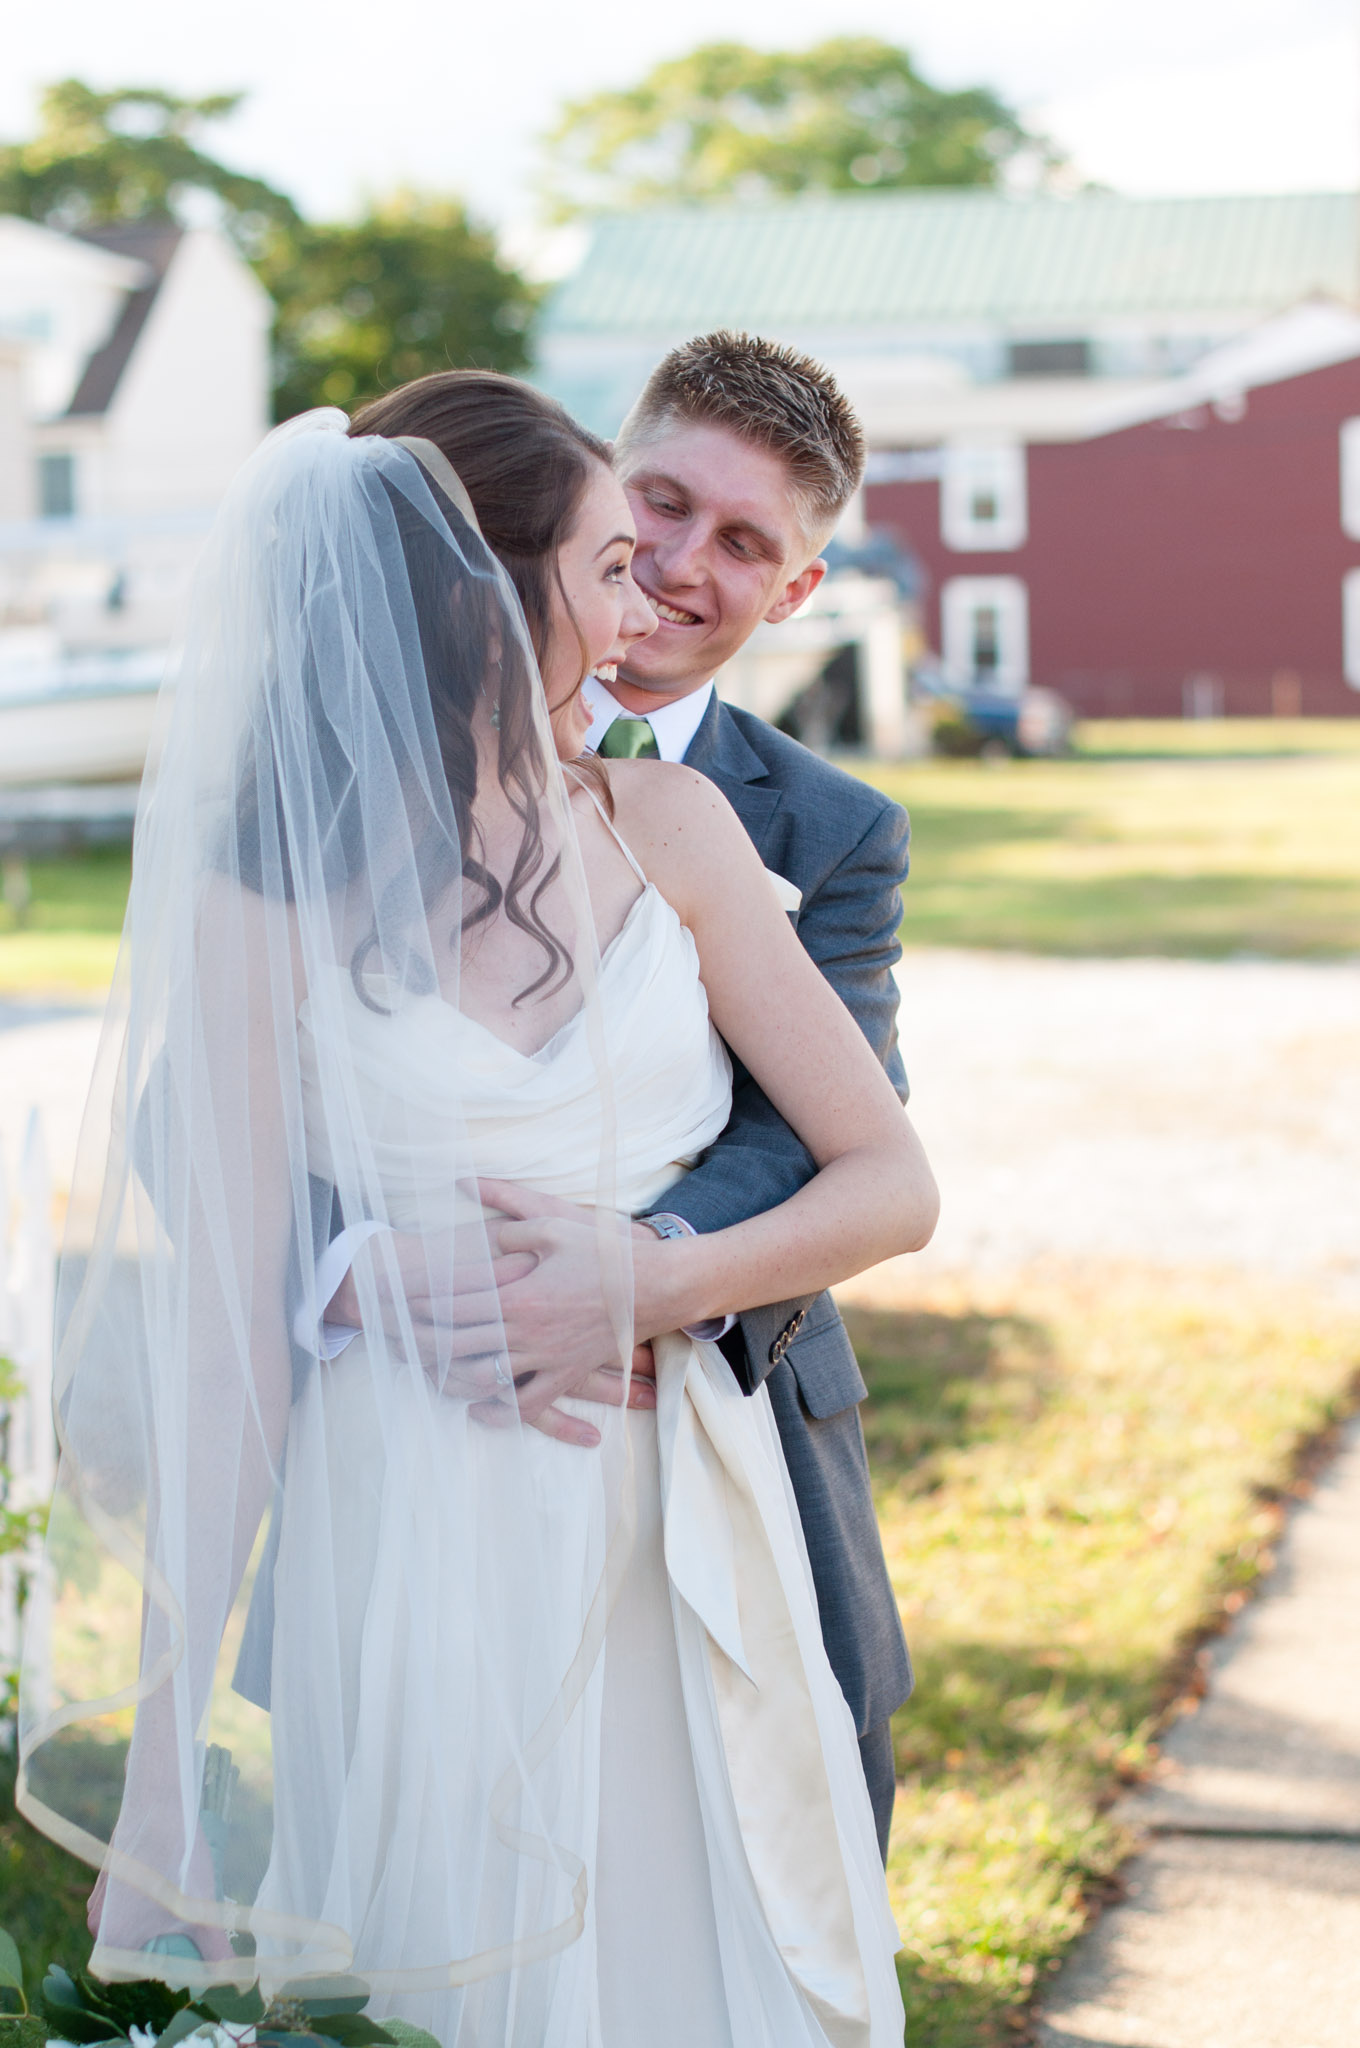 Kait+Travis - Annapolis Maritime Museum - Maryland Wedding Photographer - Alison Dunn Photography photo